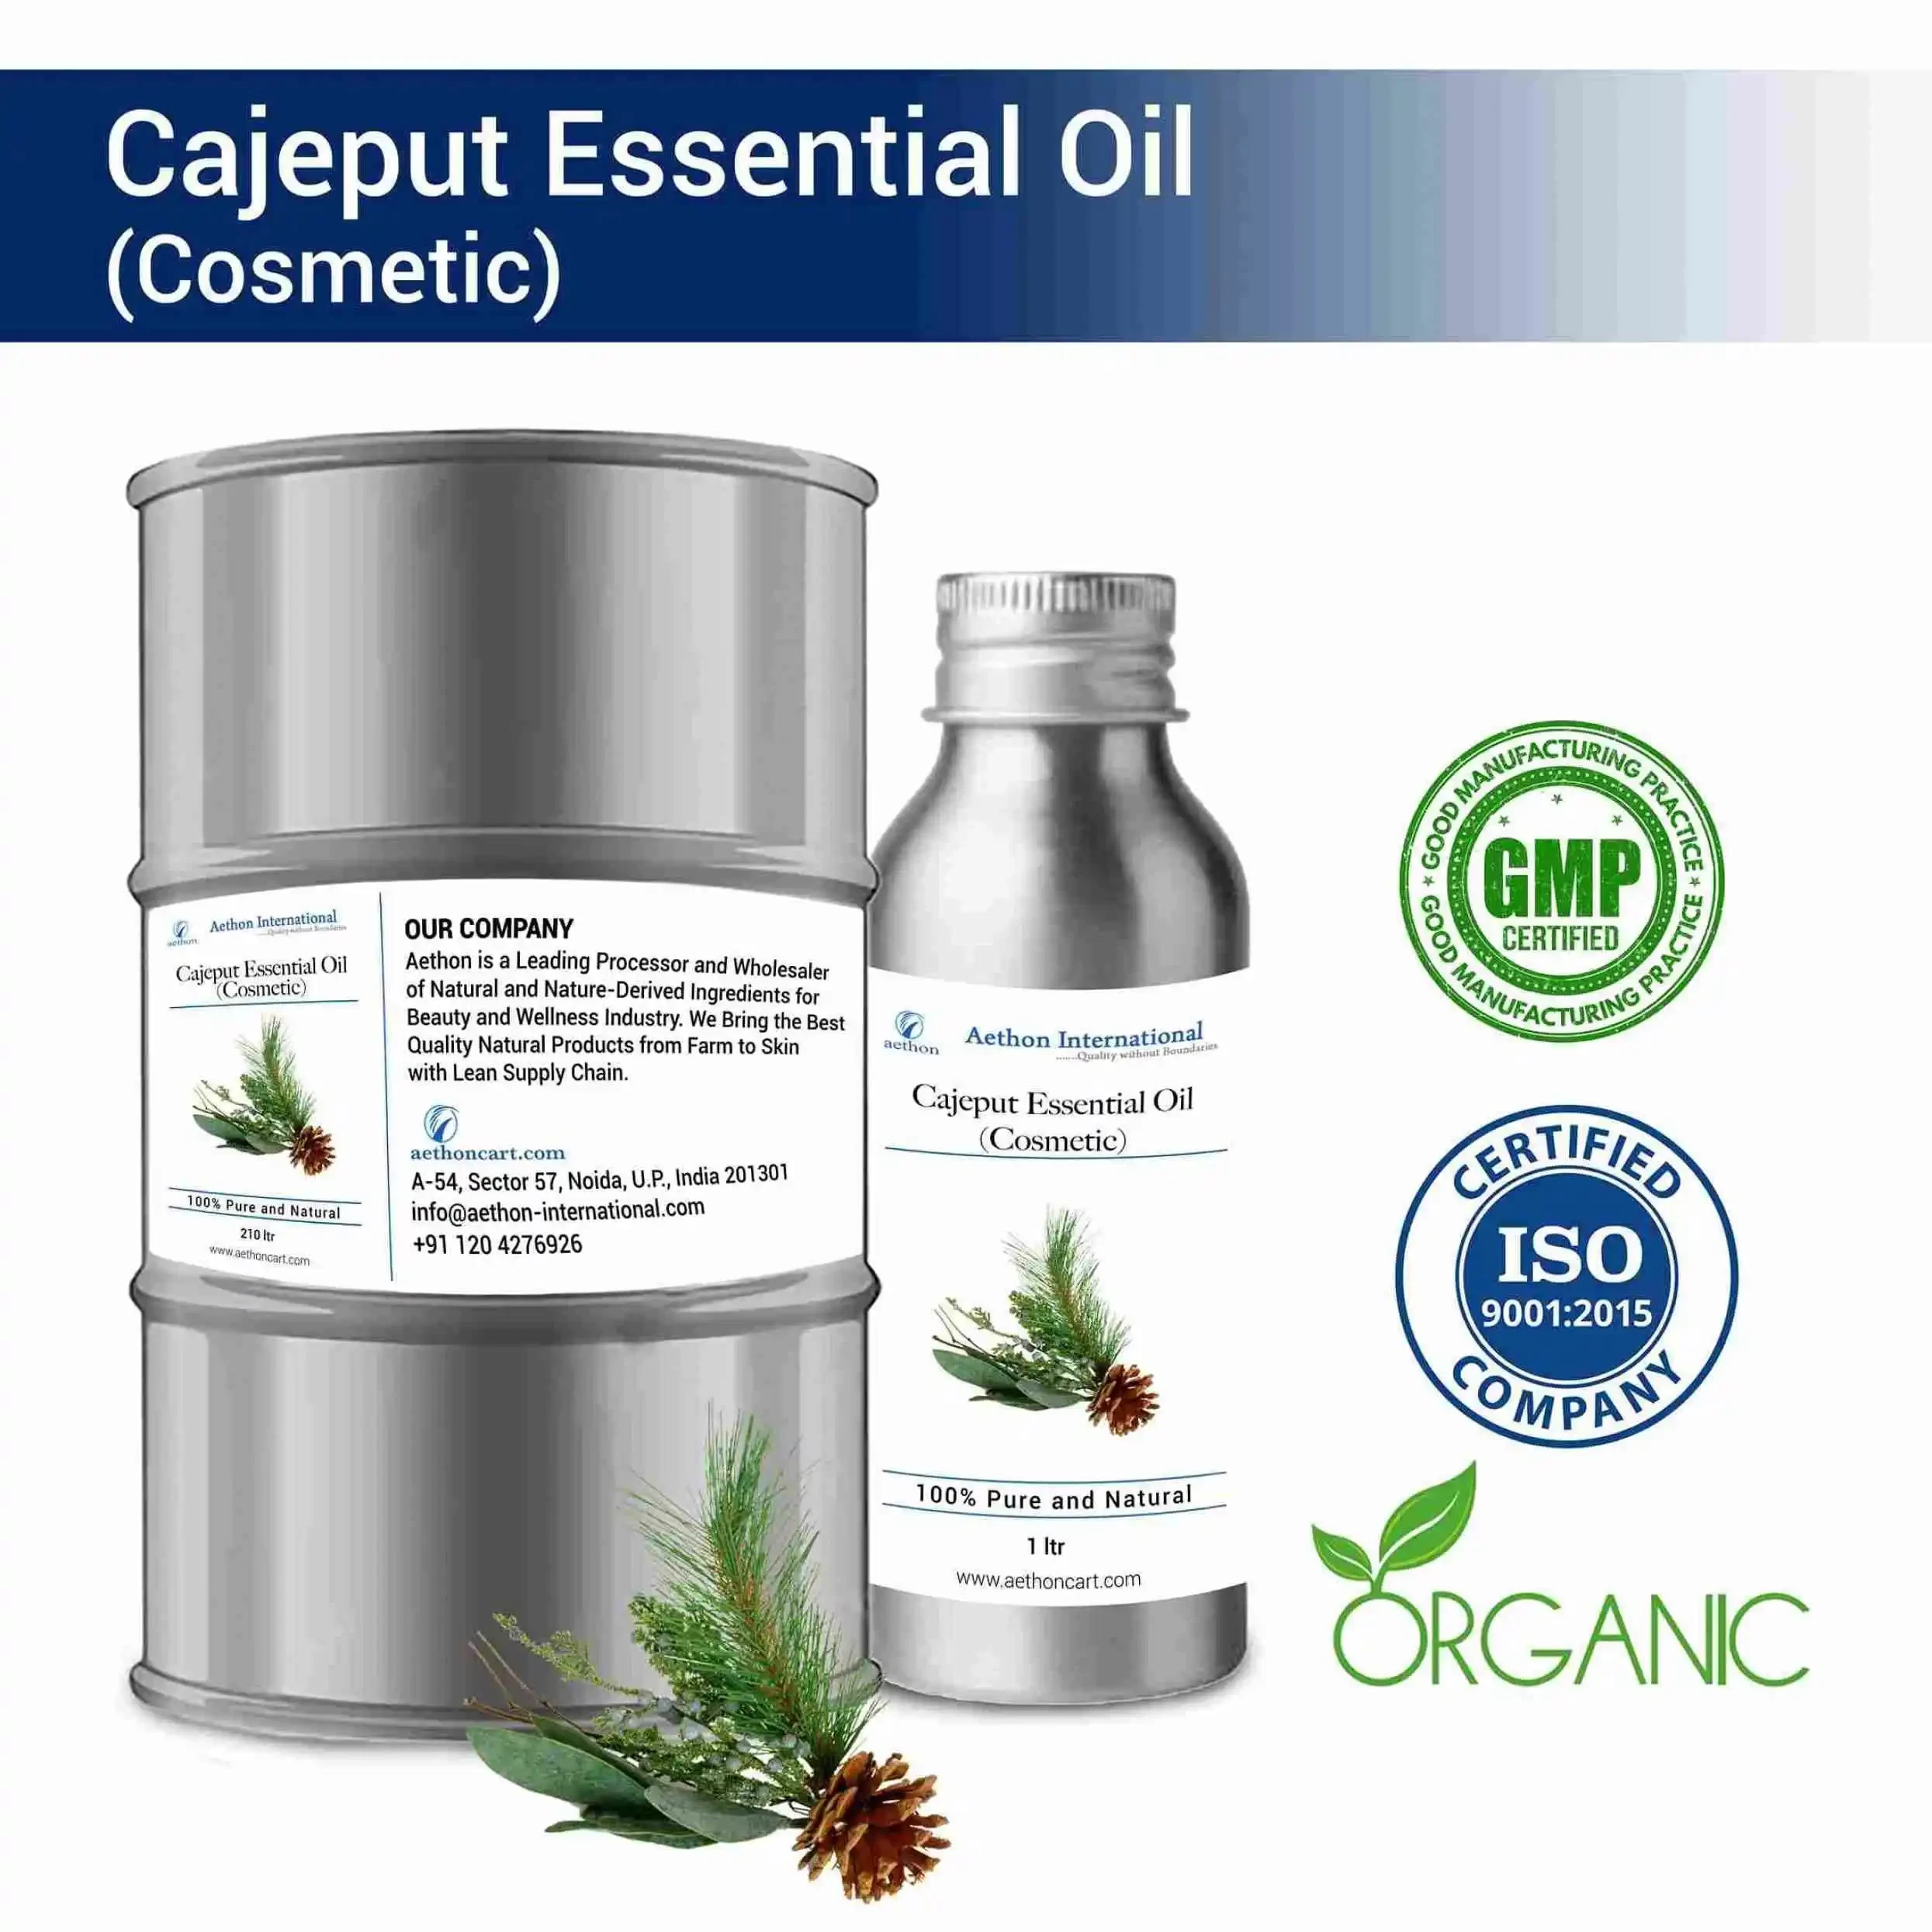 Cajeput Essential Oil (Cosmetic)